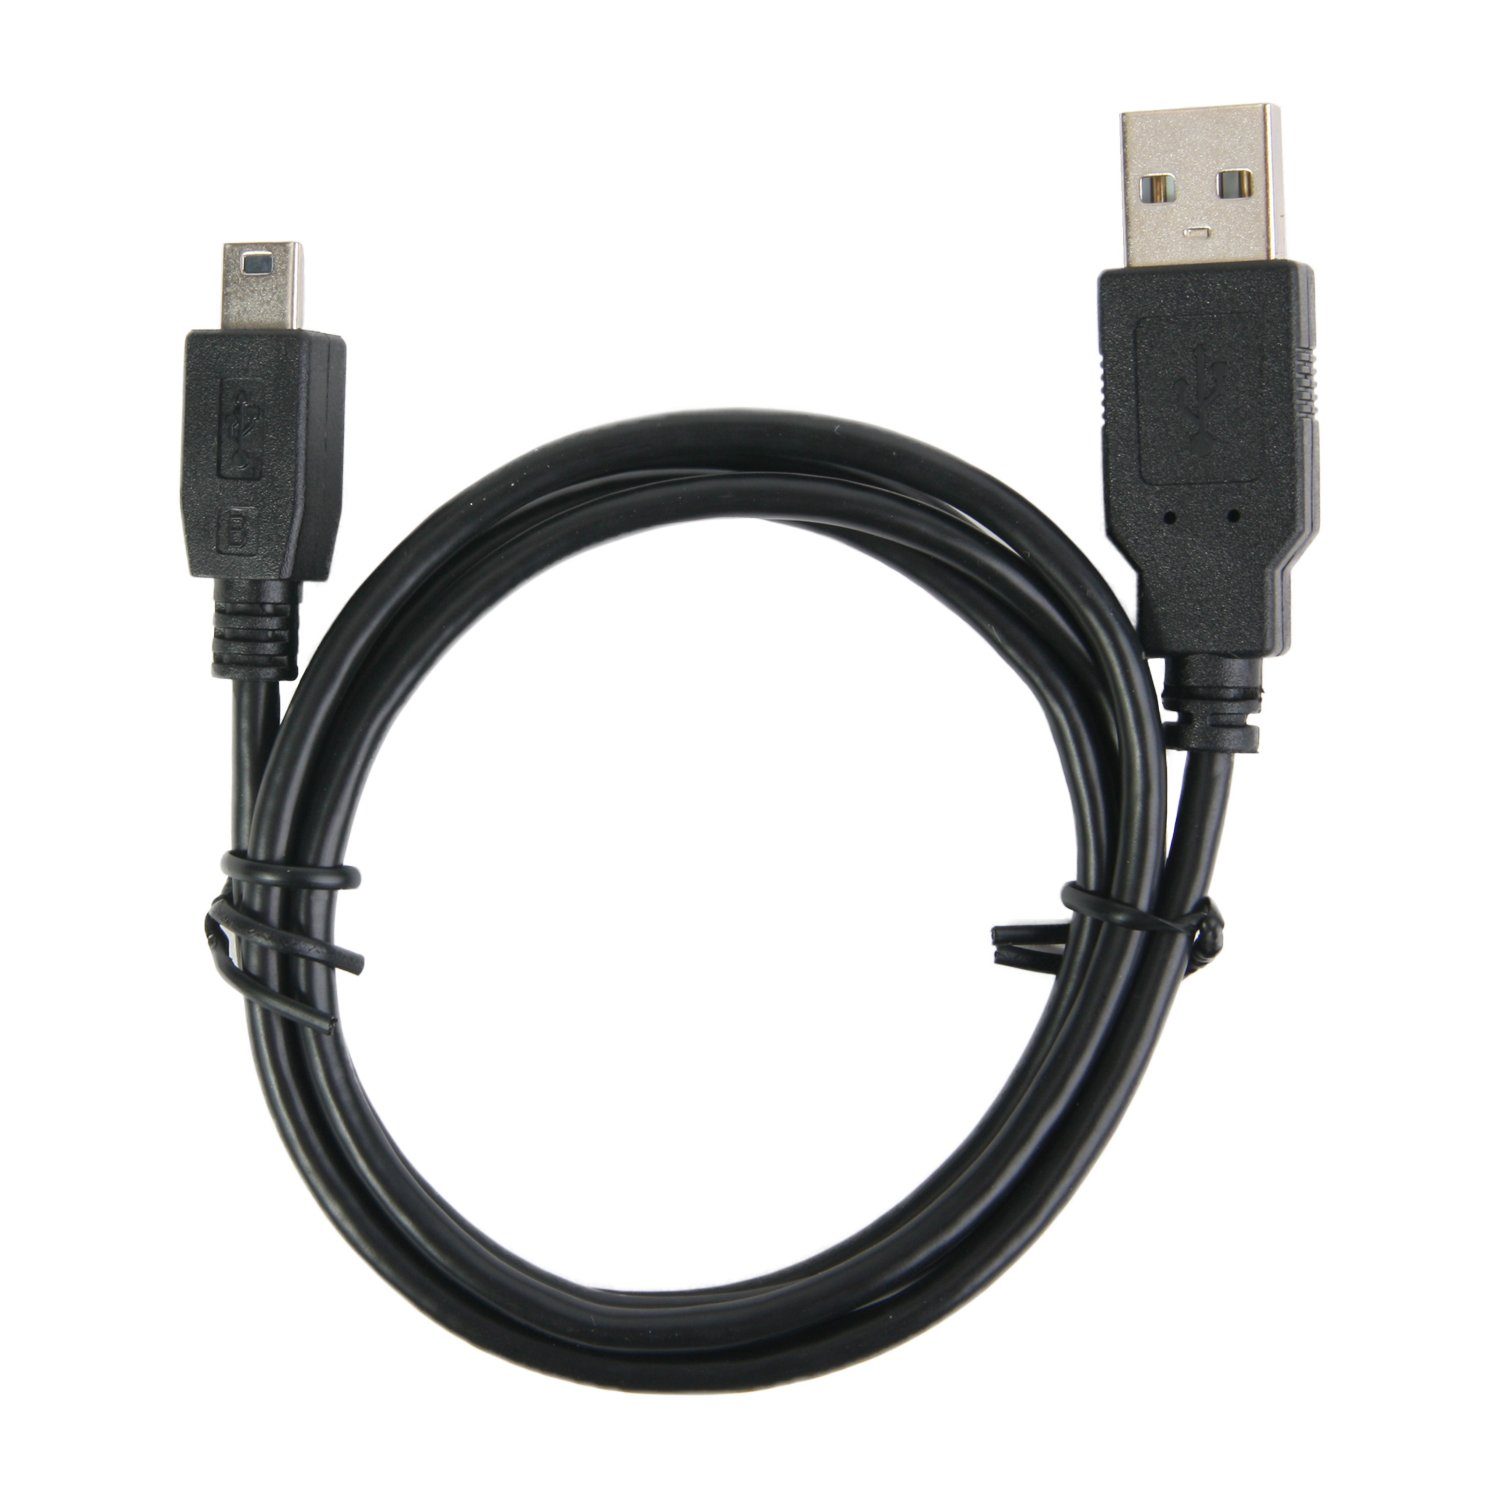 AIV 1m Mini-USB Kabel Daten-Kabel Ladekabel USB-Kabel, USB Typ A, USB Typ  Mini-B, USB 2.0 Anschluss-Kabel mit Mini-B-Stecker, passend für PC,  Notebook, Laptop, Tablet, Handy, Smartphone, Navi, MP3-Player etc.